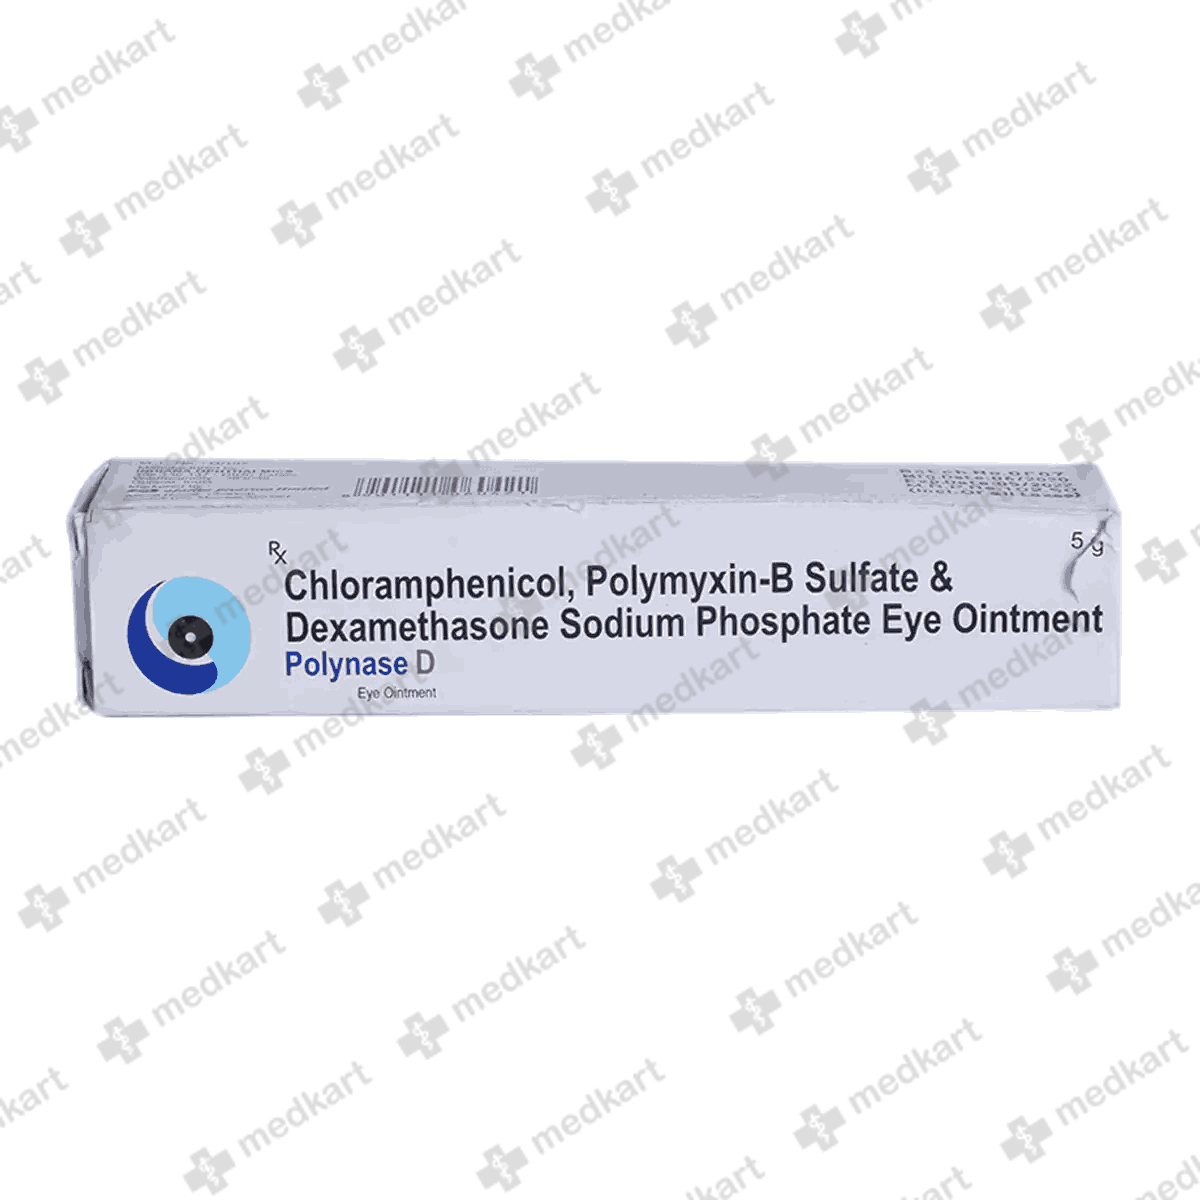 polynase-d-eye-ointment-5-gm